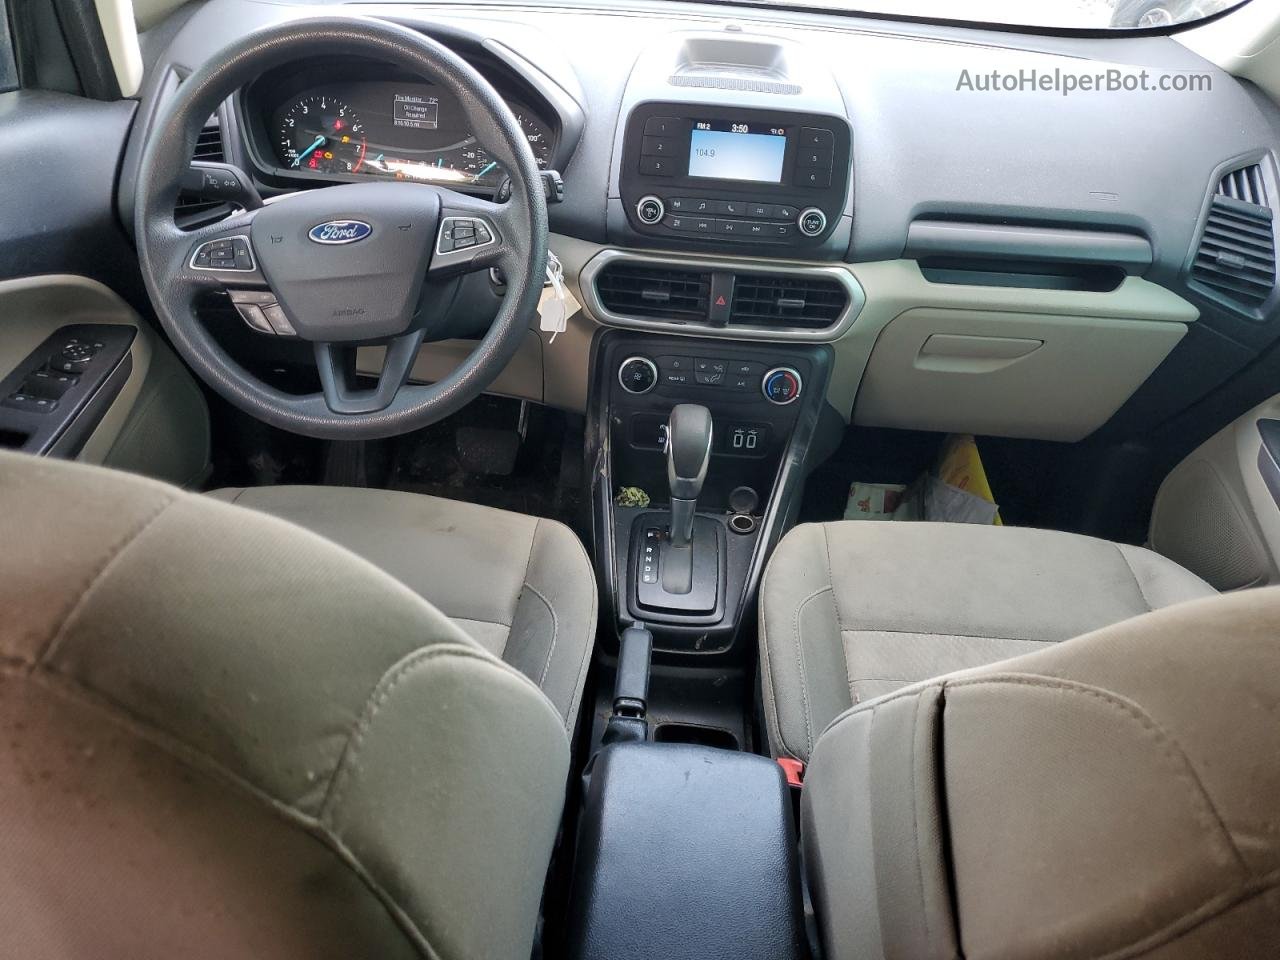 2019 Ford Ecosport S Gray vin: MAJ3S2FE3KC308423